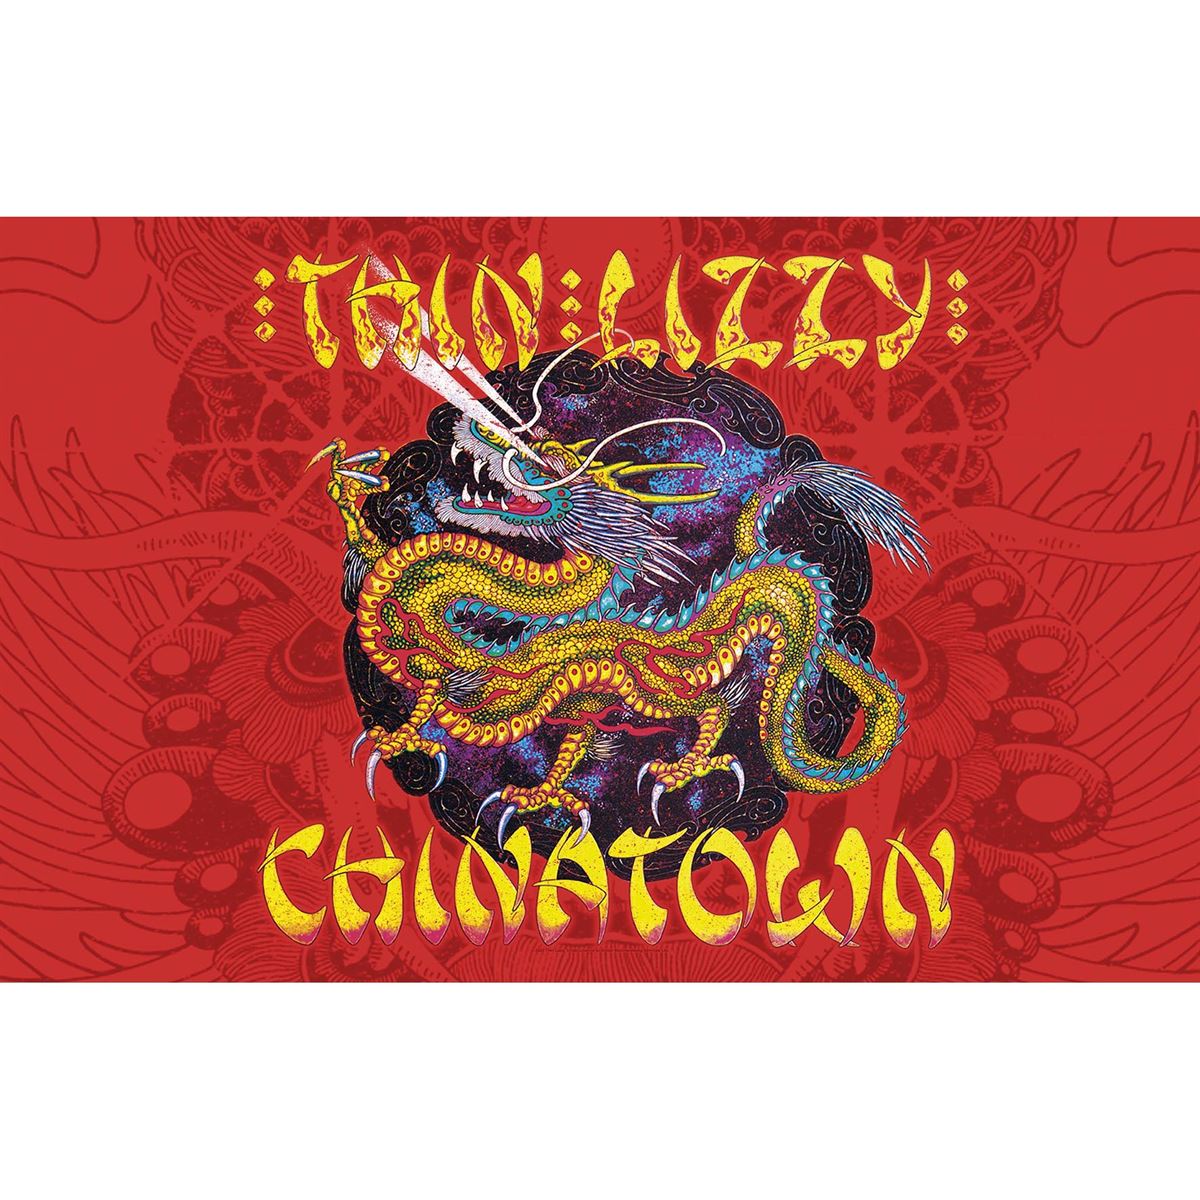 Thin Lizzy - Premium Textile Poster Flag (Chinatown) 104cm x 66cm